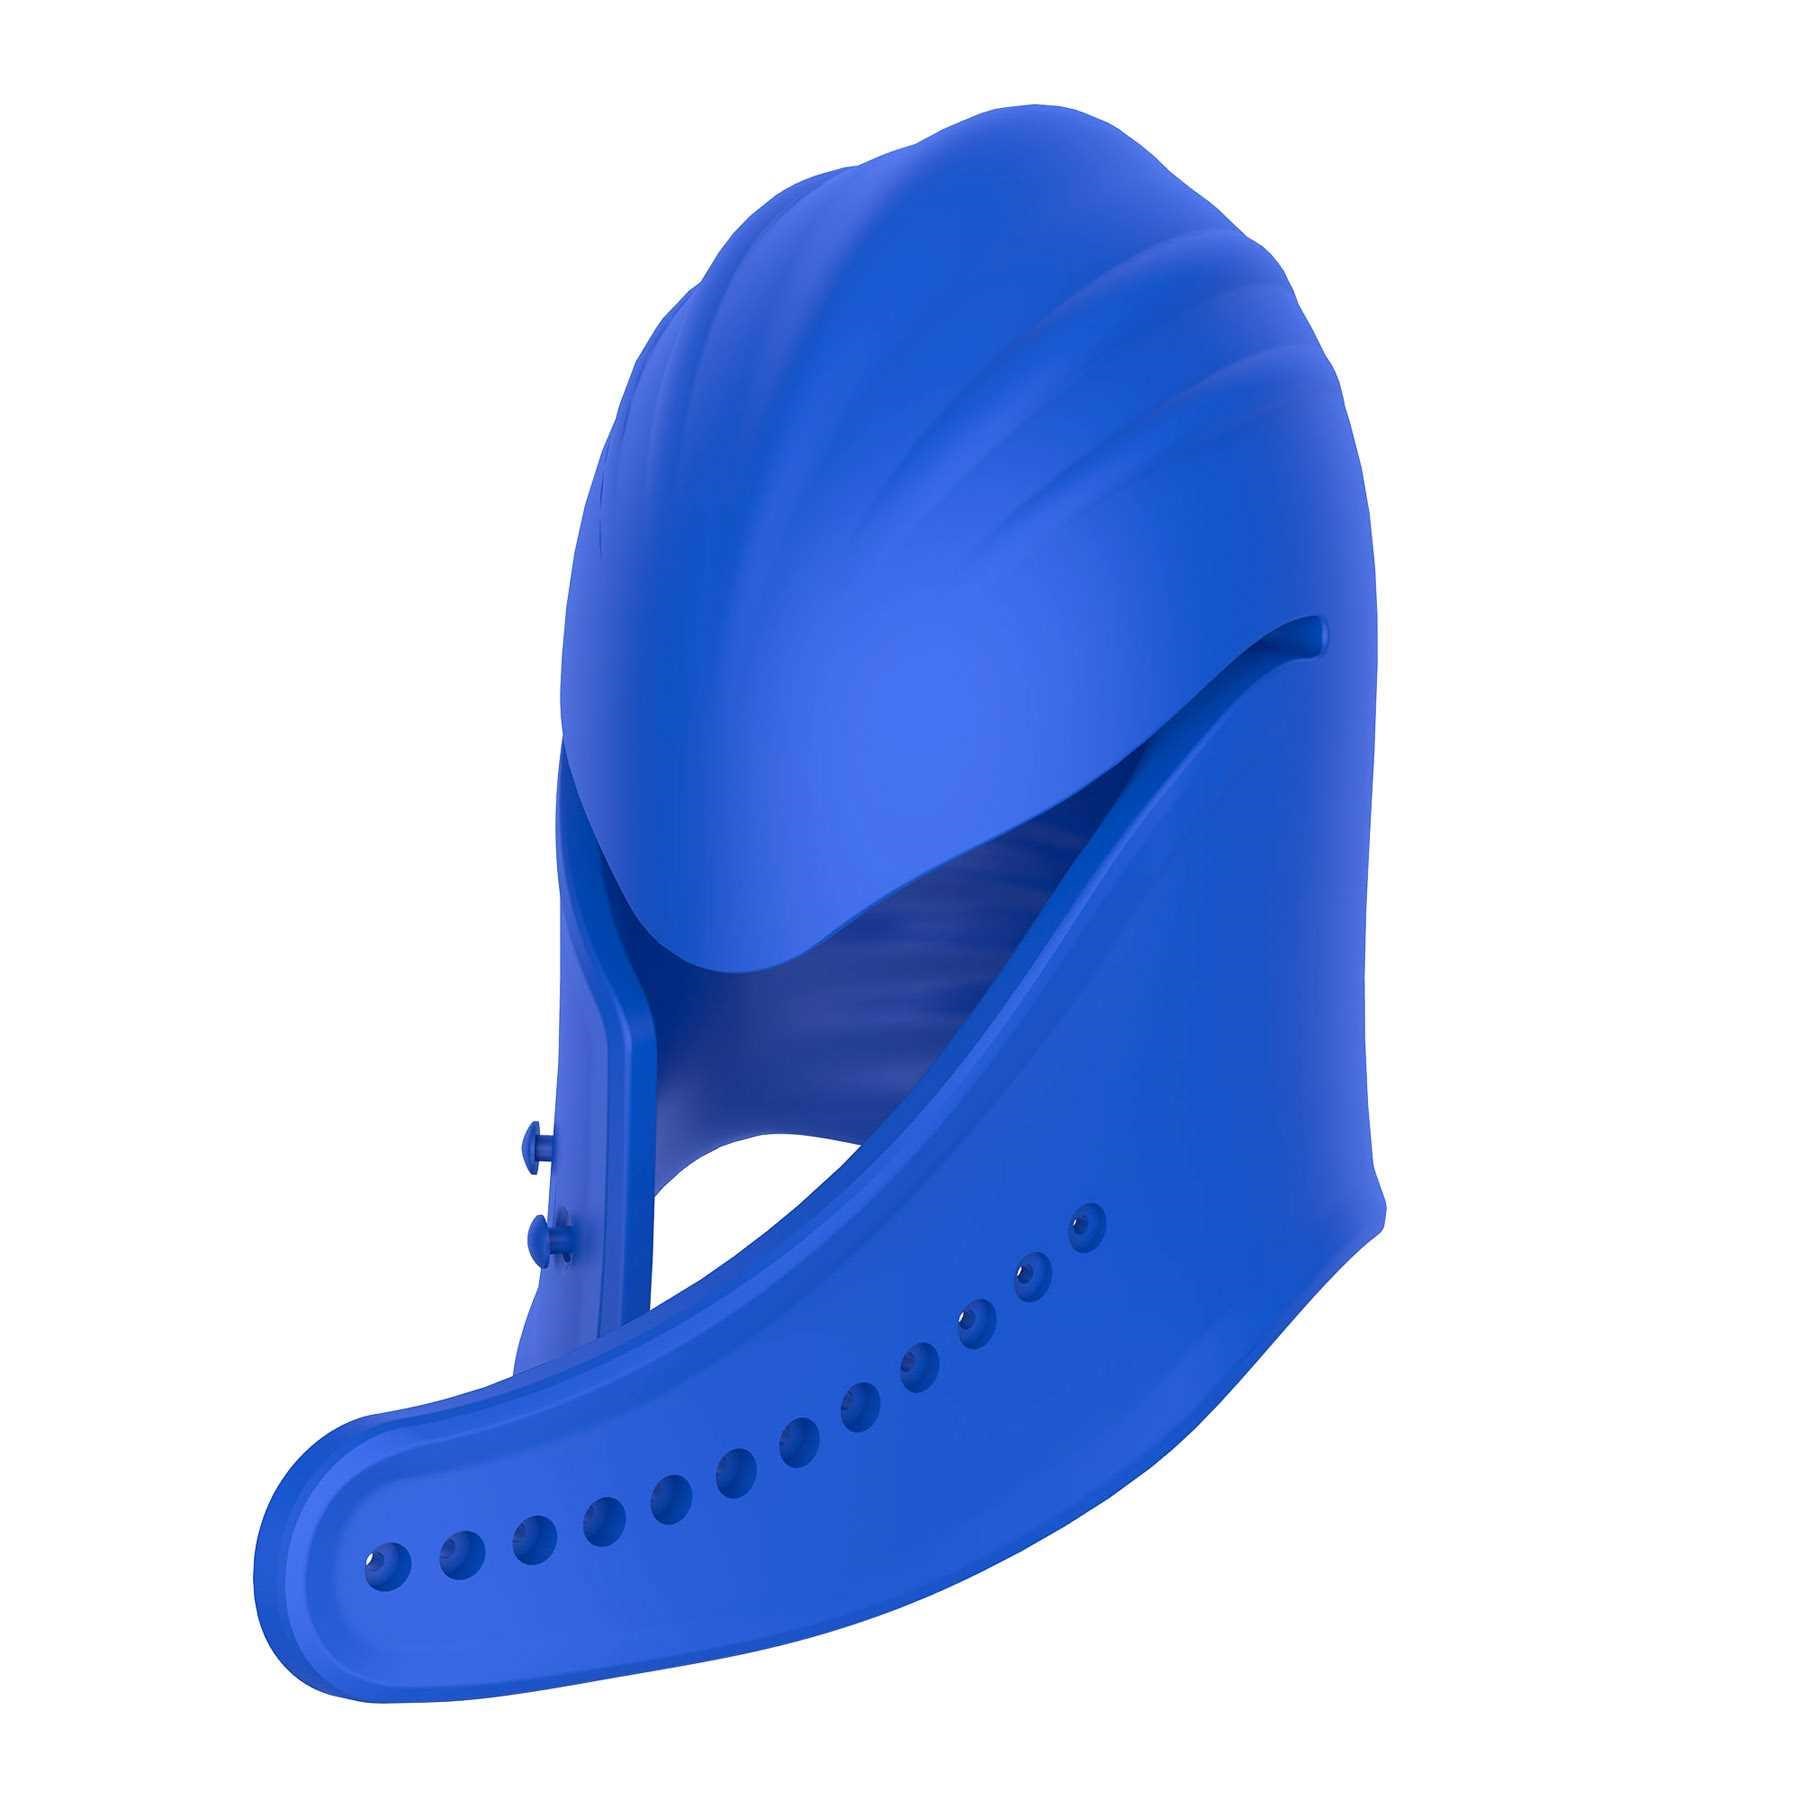 Gladiator Tip Vibrator left facing blue